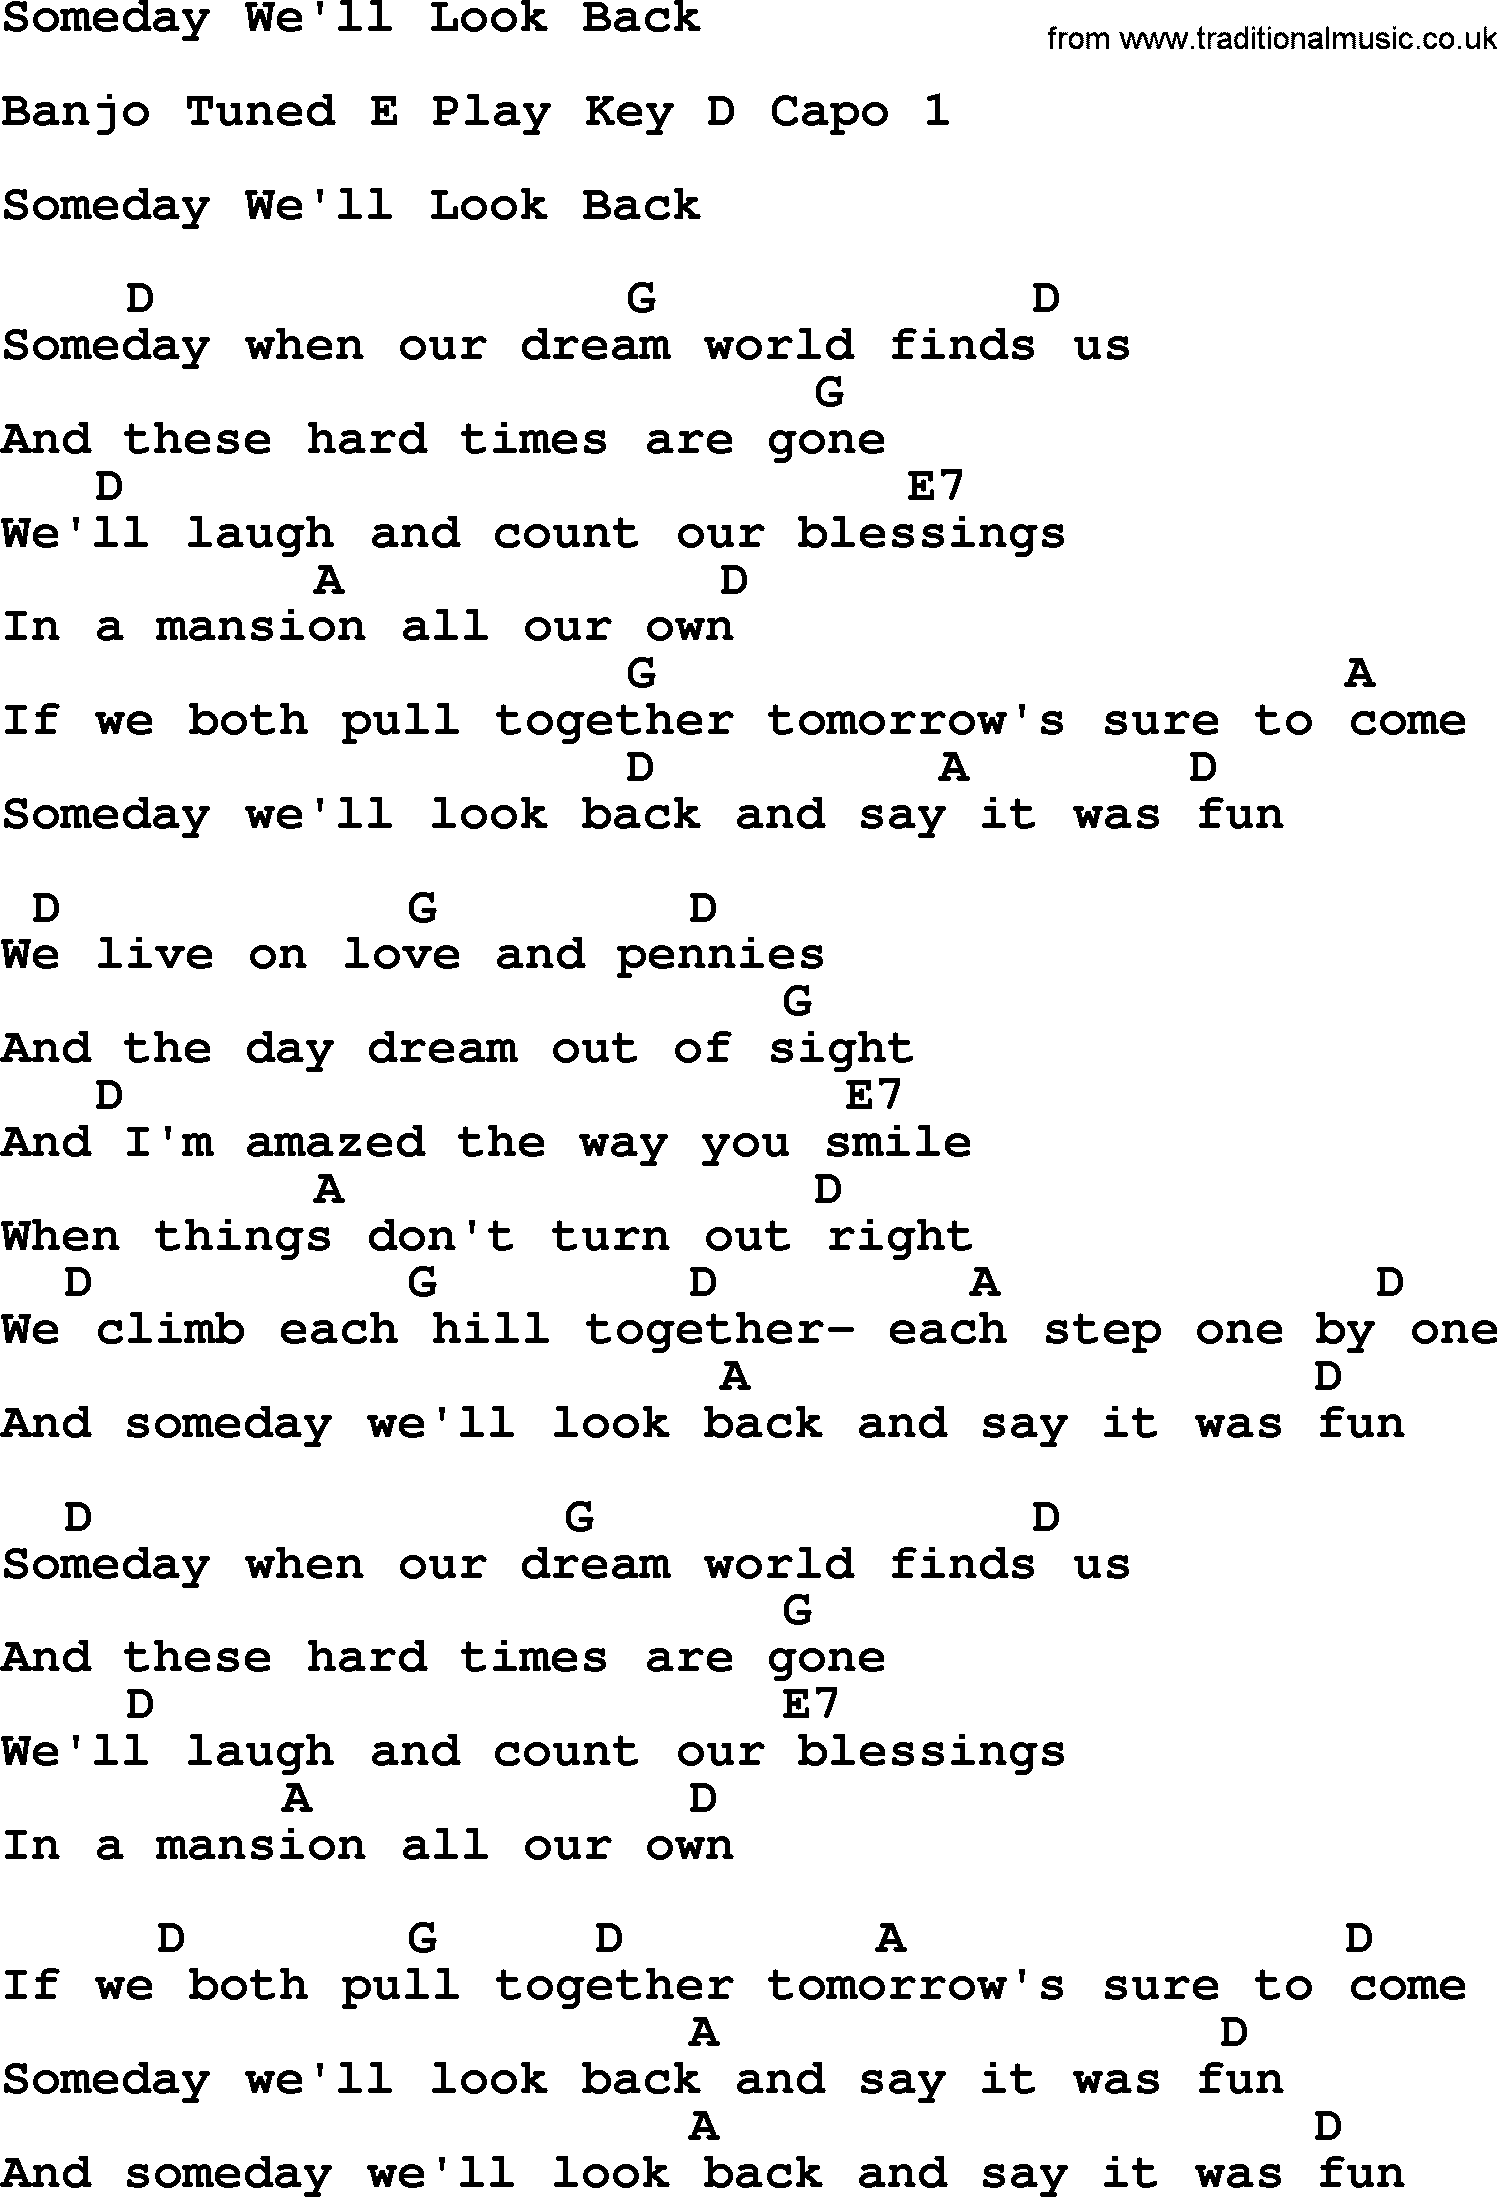 Merle Haggard song: Someday We'll Look Back, lyrics and chords